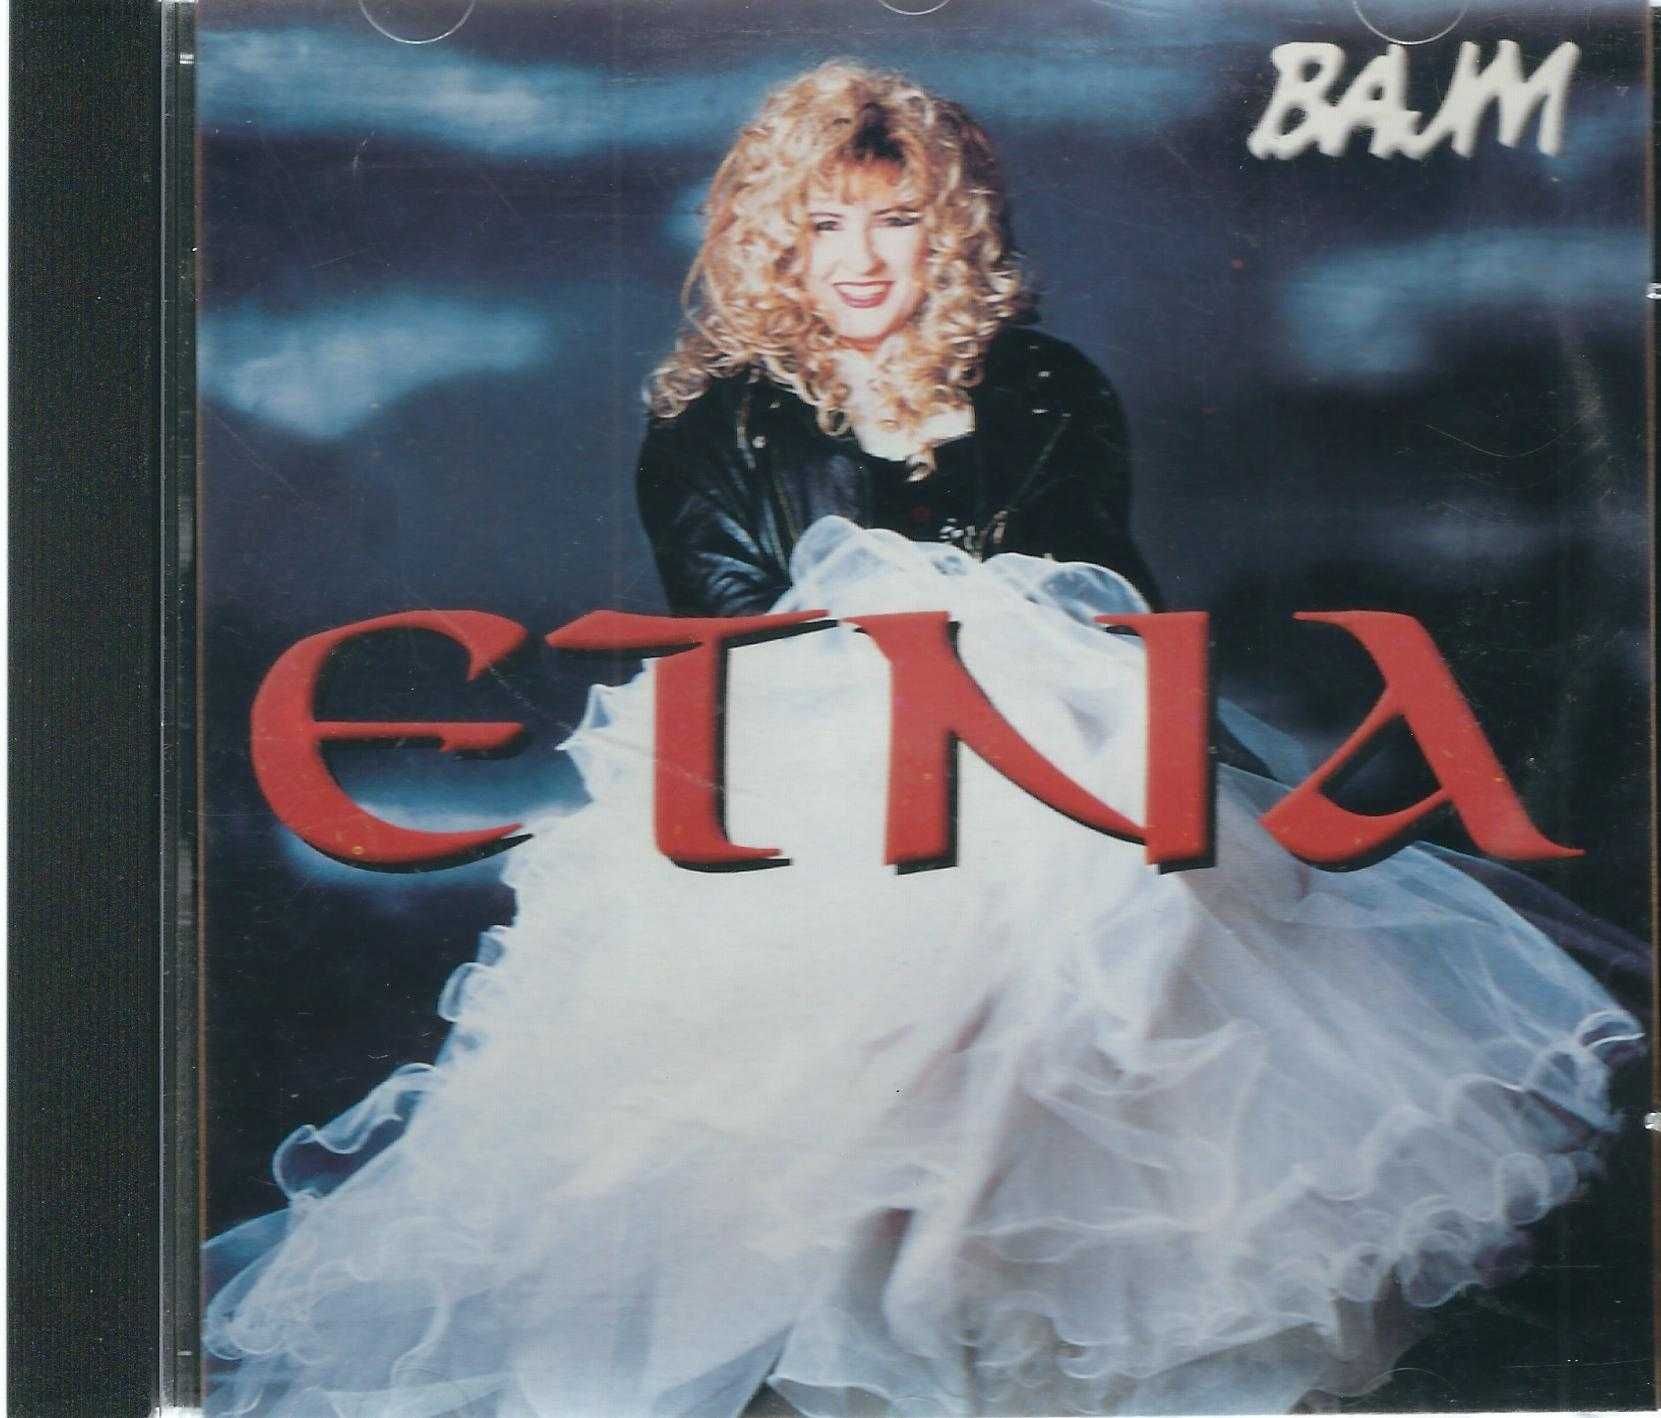 CD Bajm - Etna (1995)